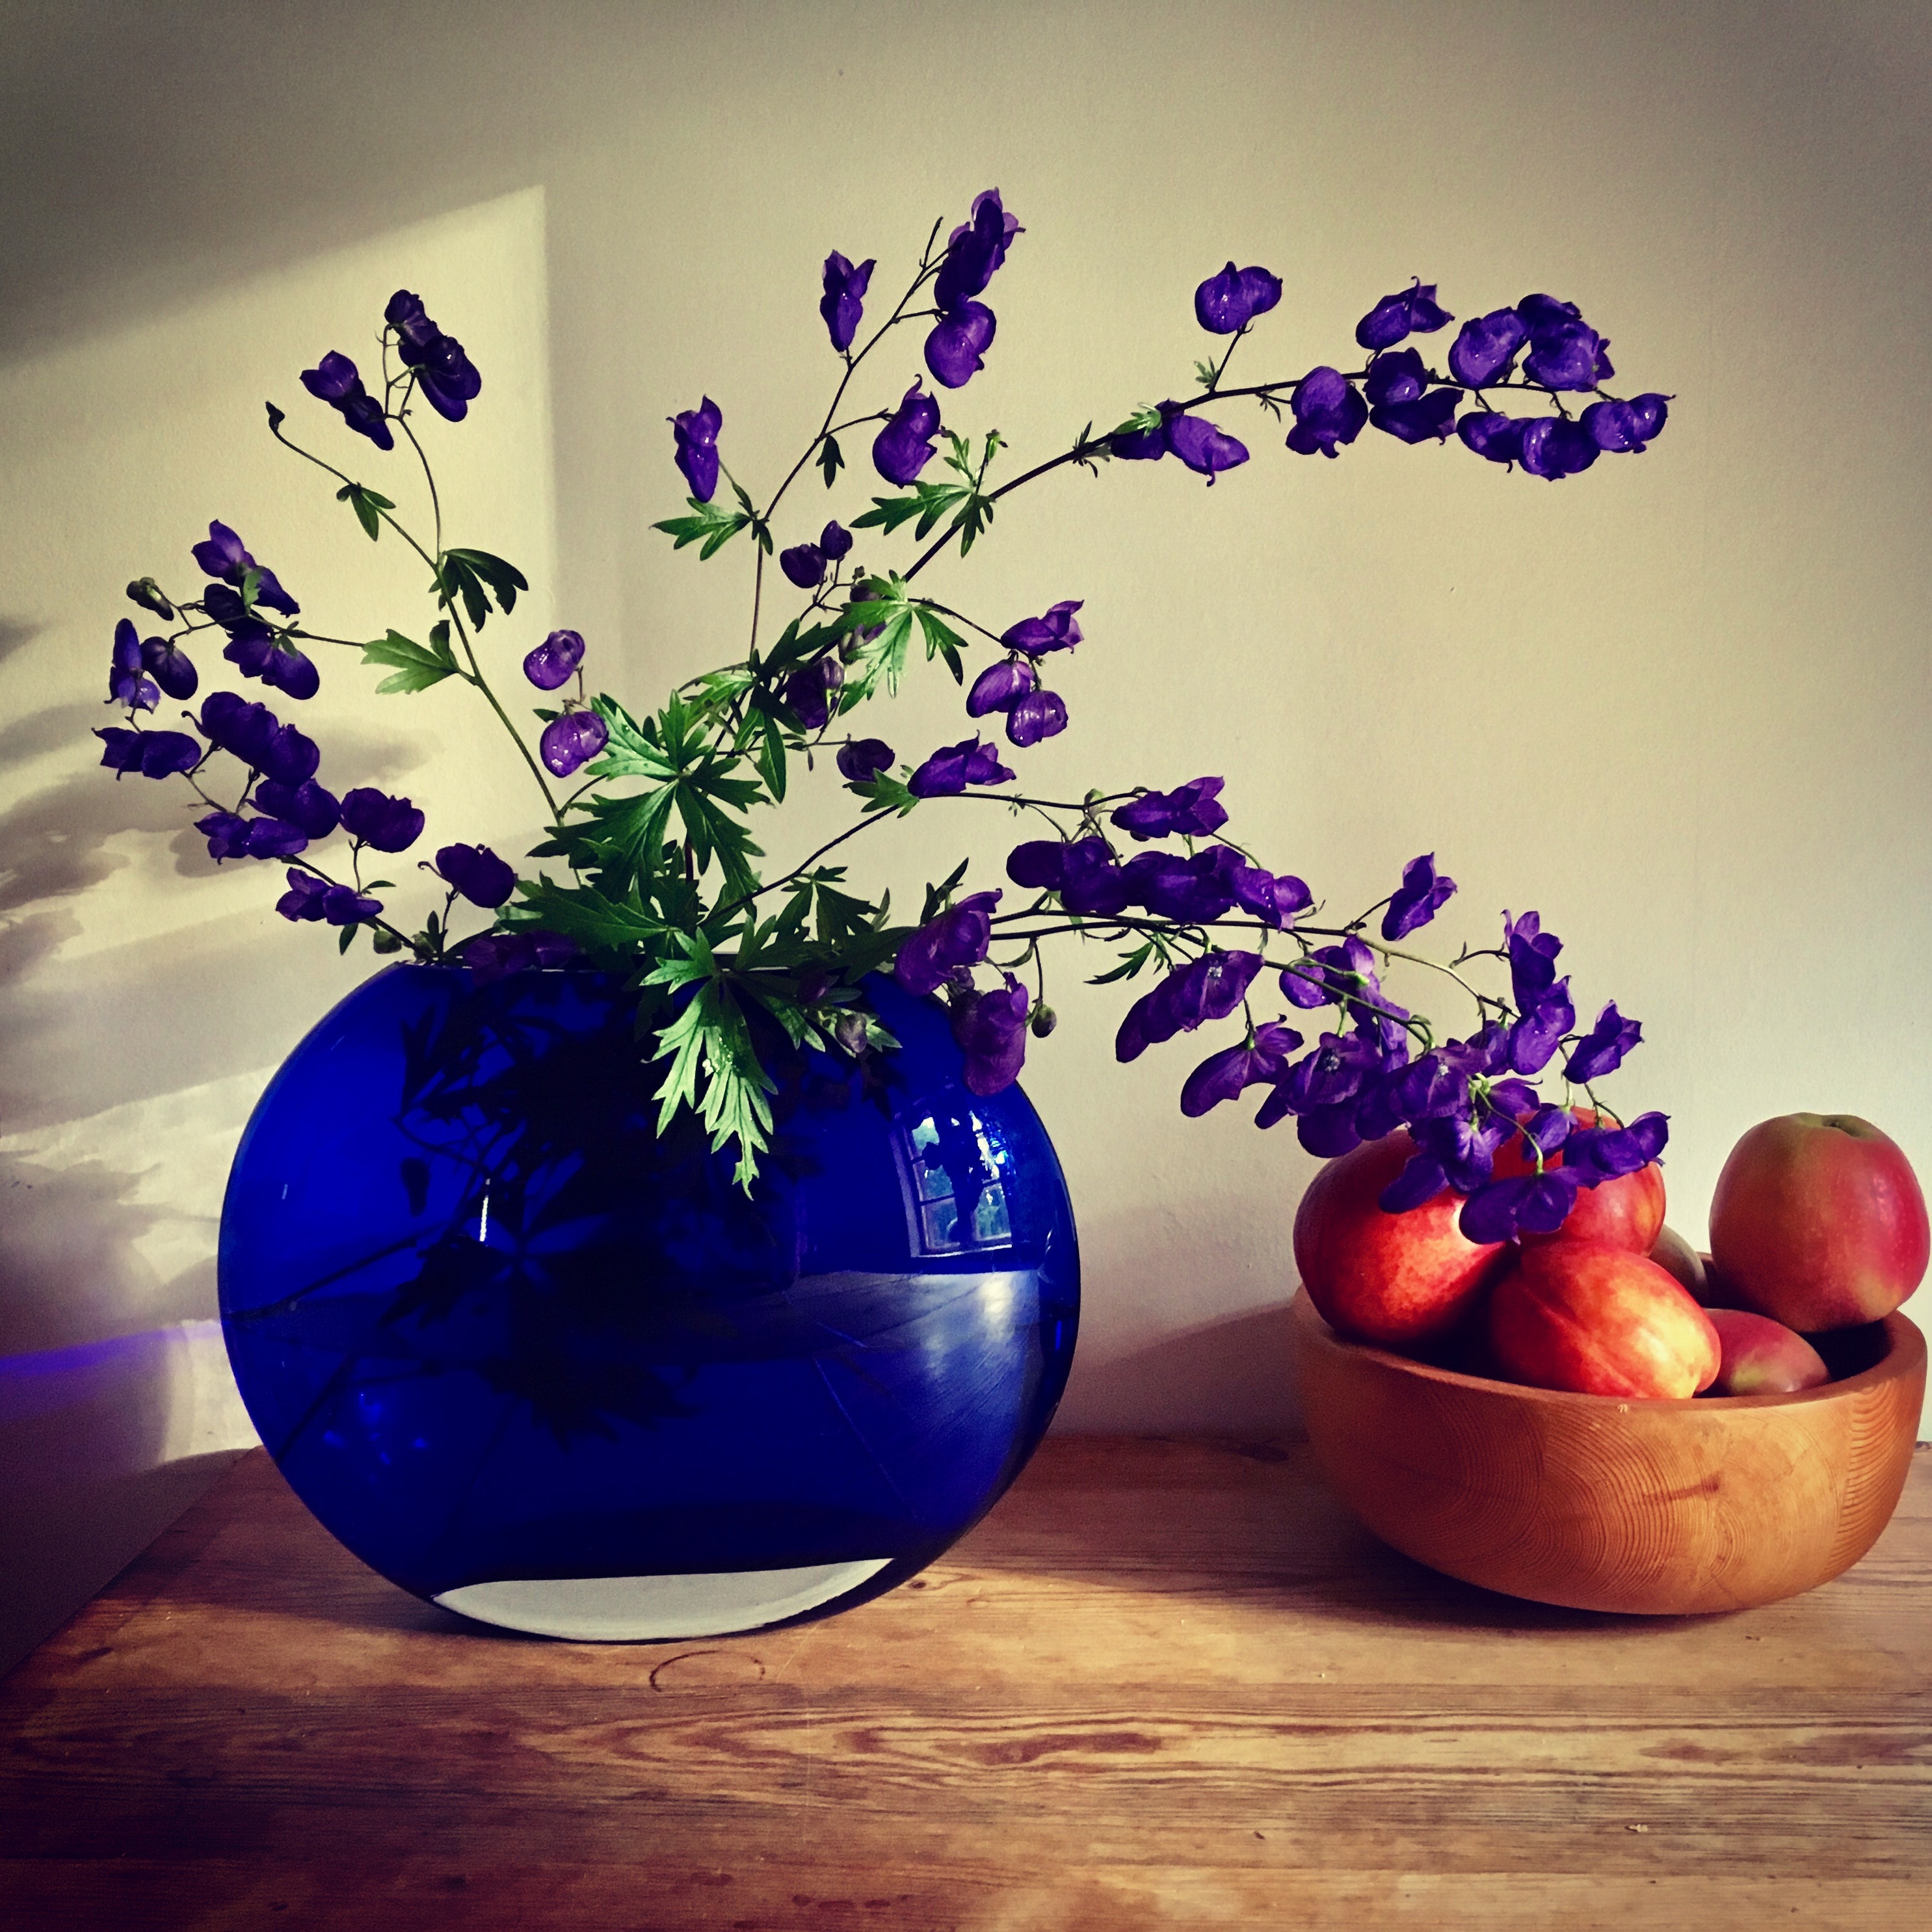 Purple petaled flower arrangement near apple fruit on table photo